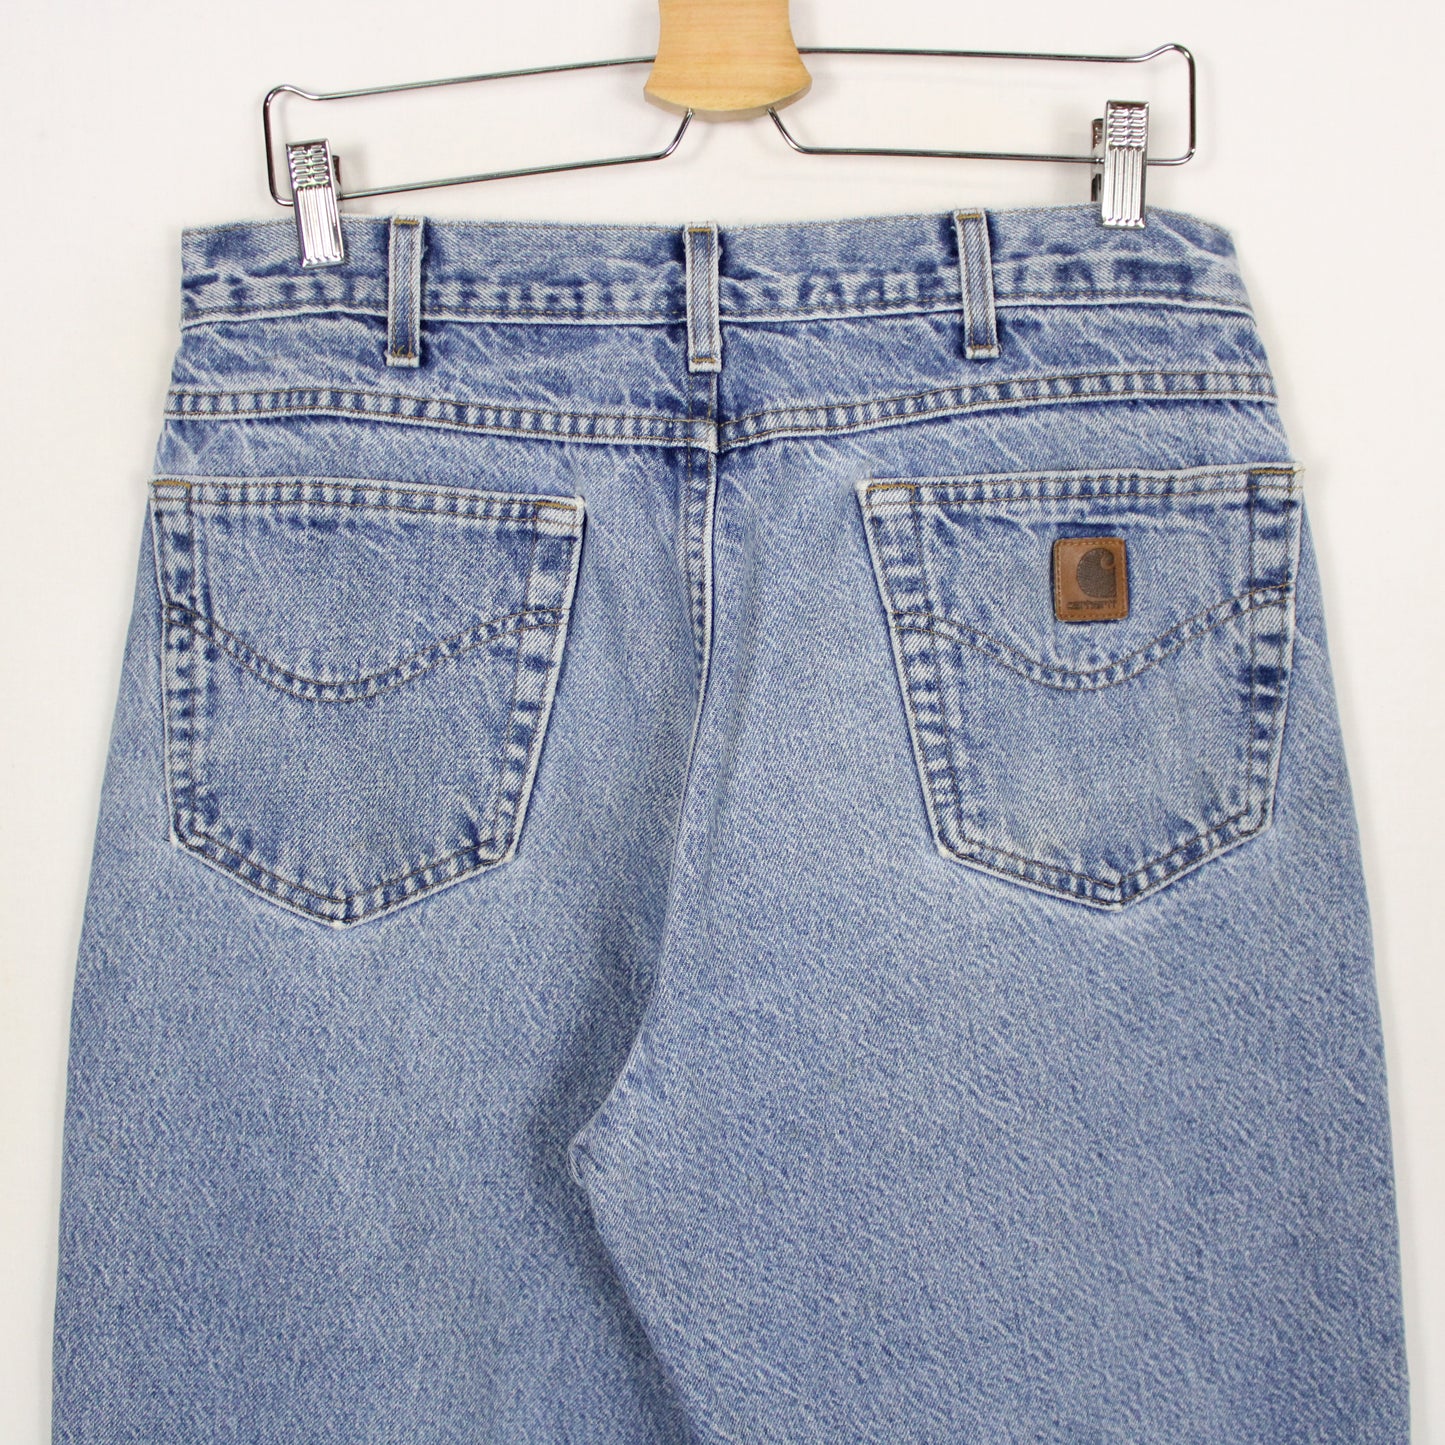 Vintage Carhartt Flannel Lined Denim Jeans - 34x30